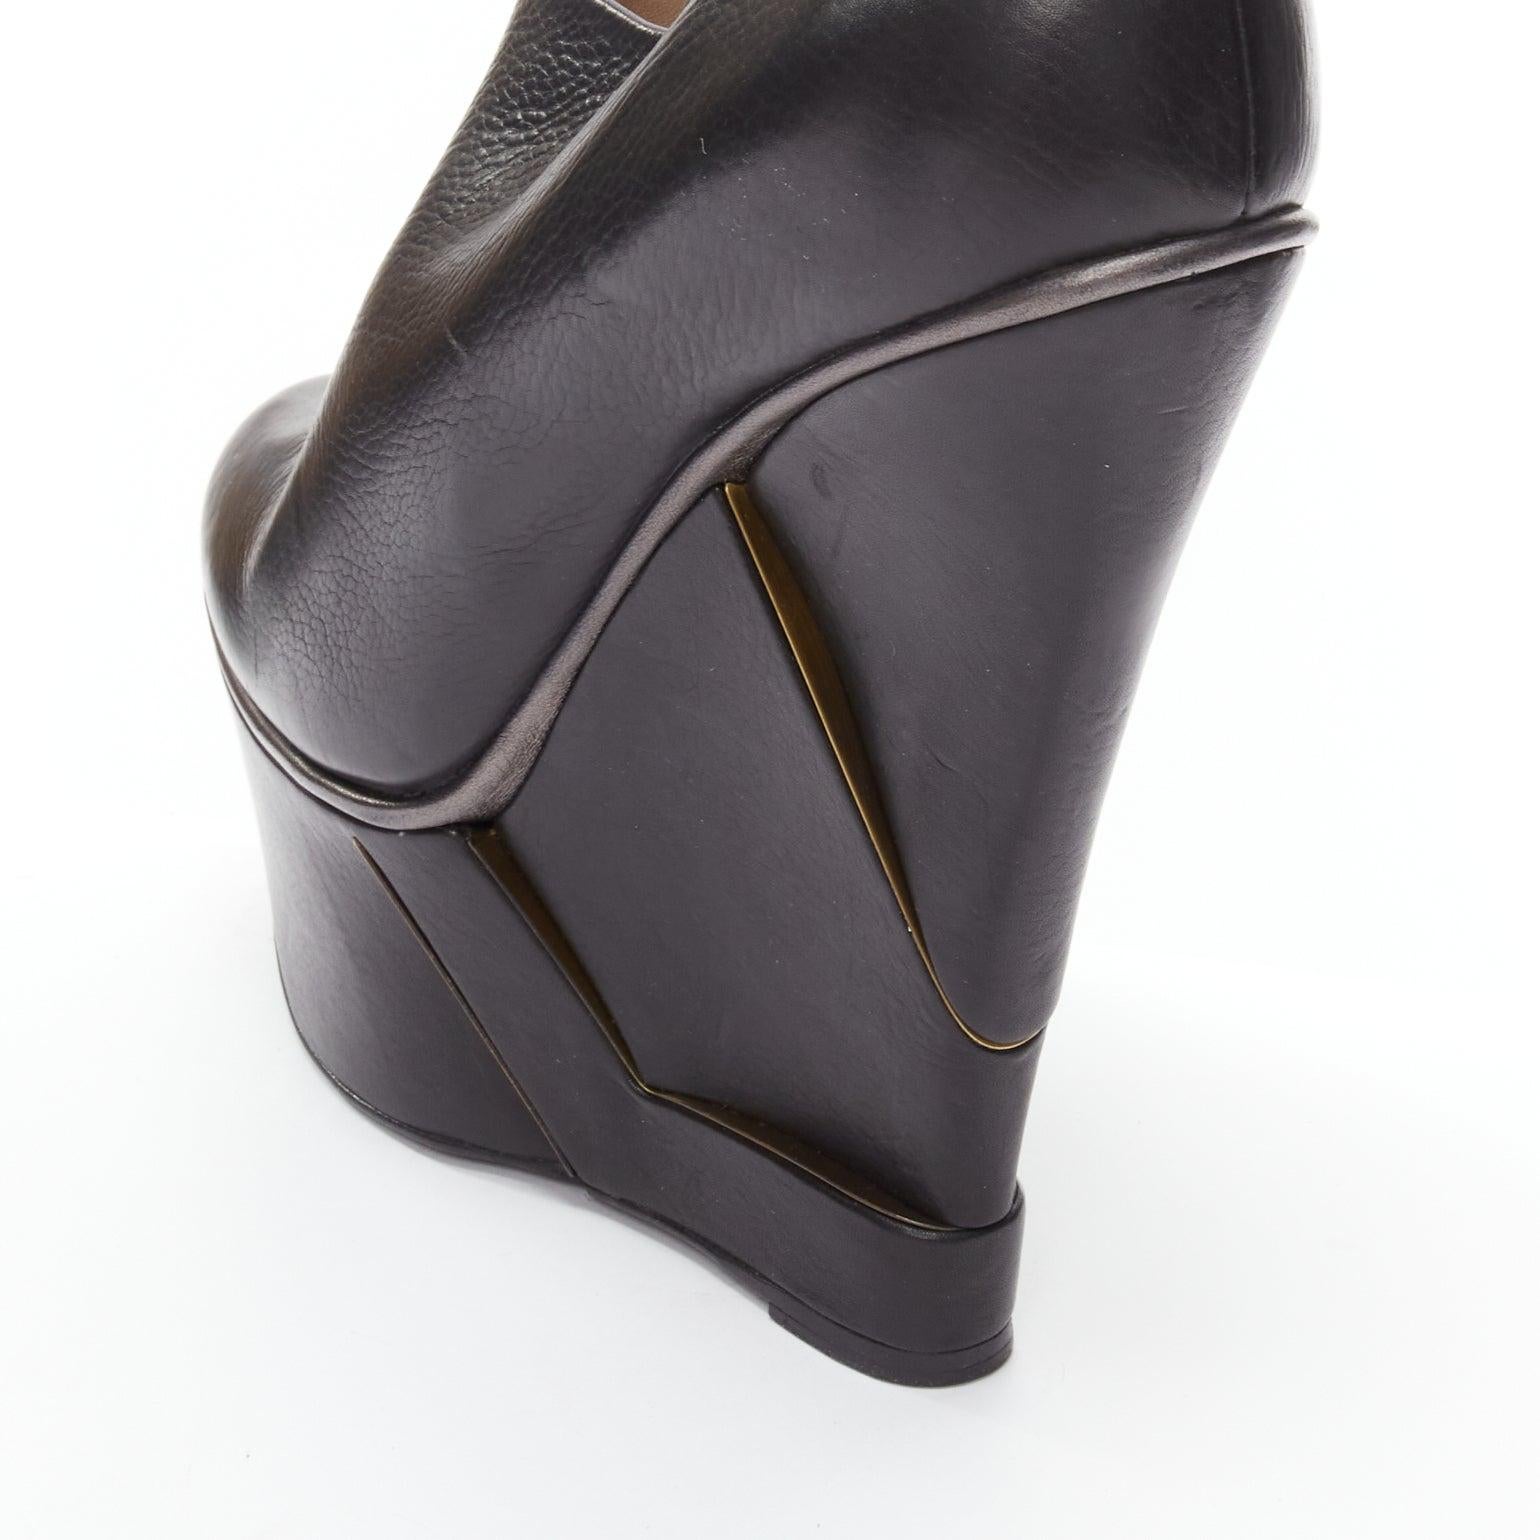 LANVIN 2010 Alber Elbaz black leather structural wedge platform bootie EU38 For Sale 3